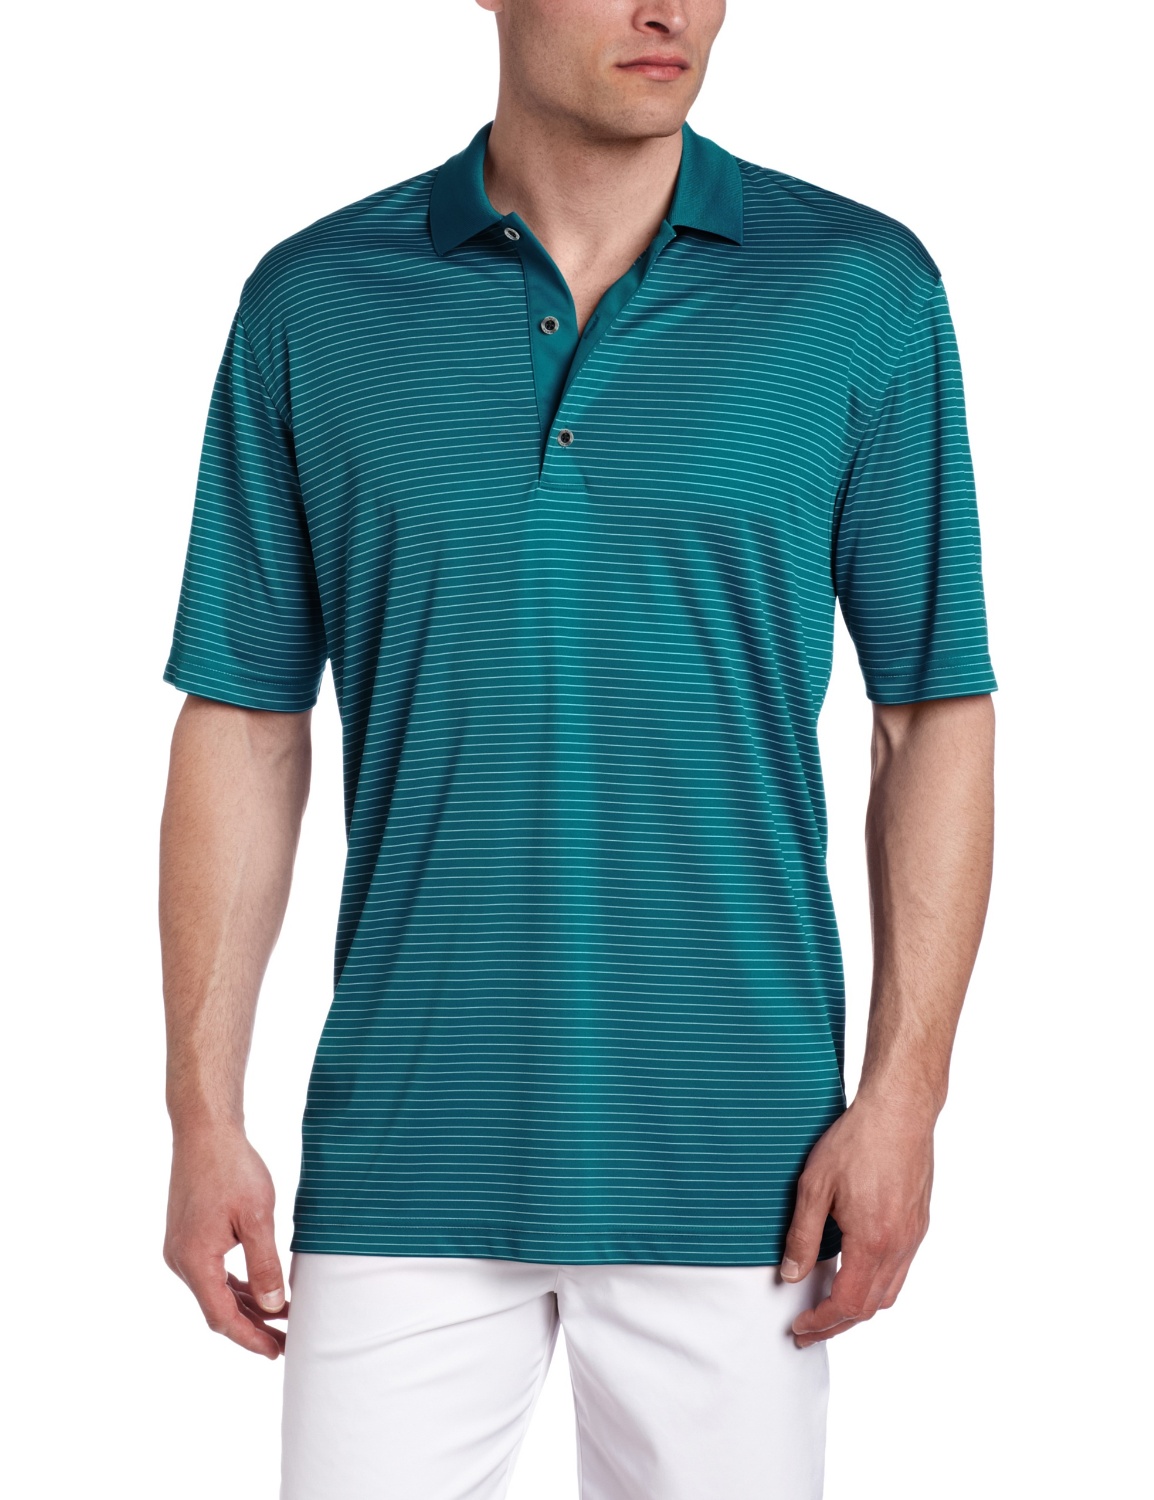 Greg Norman Mens Fine Line Stripe Golf Shirts